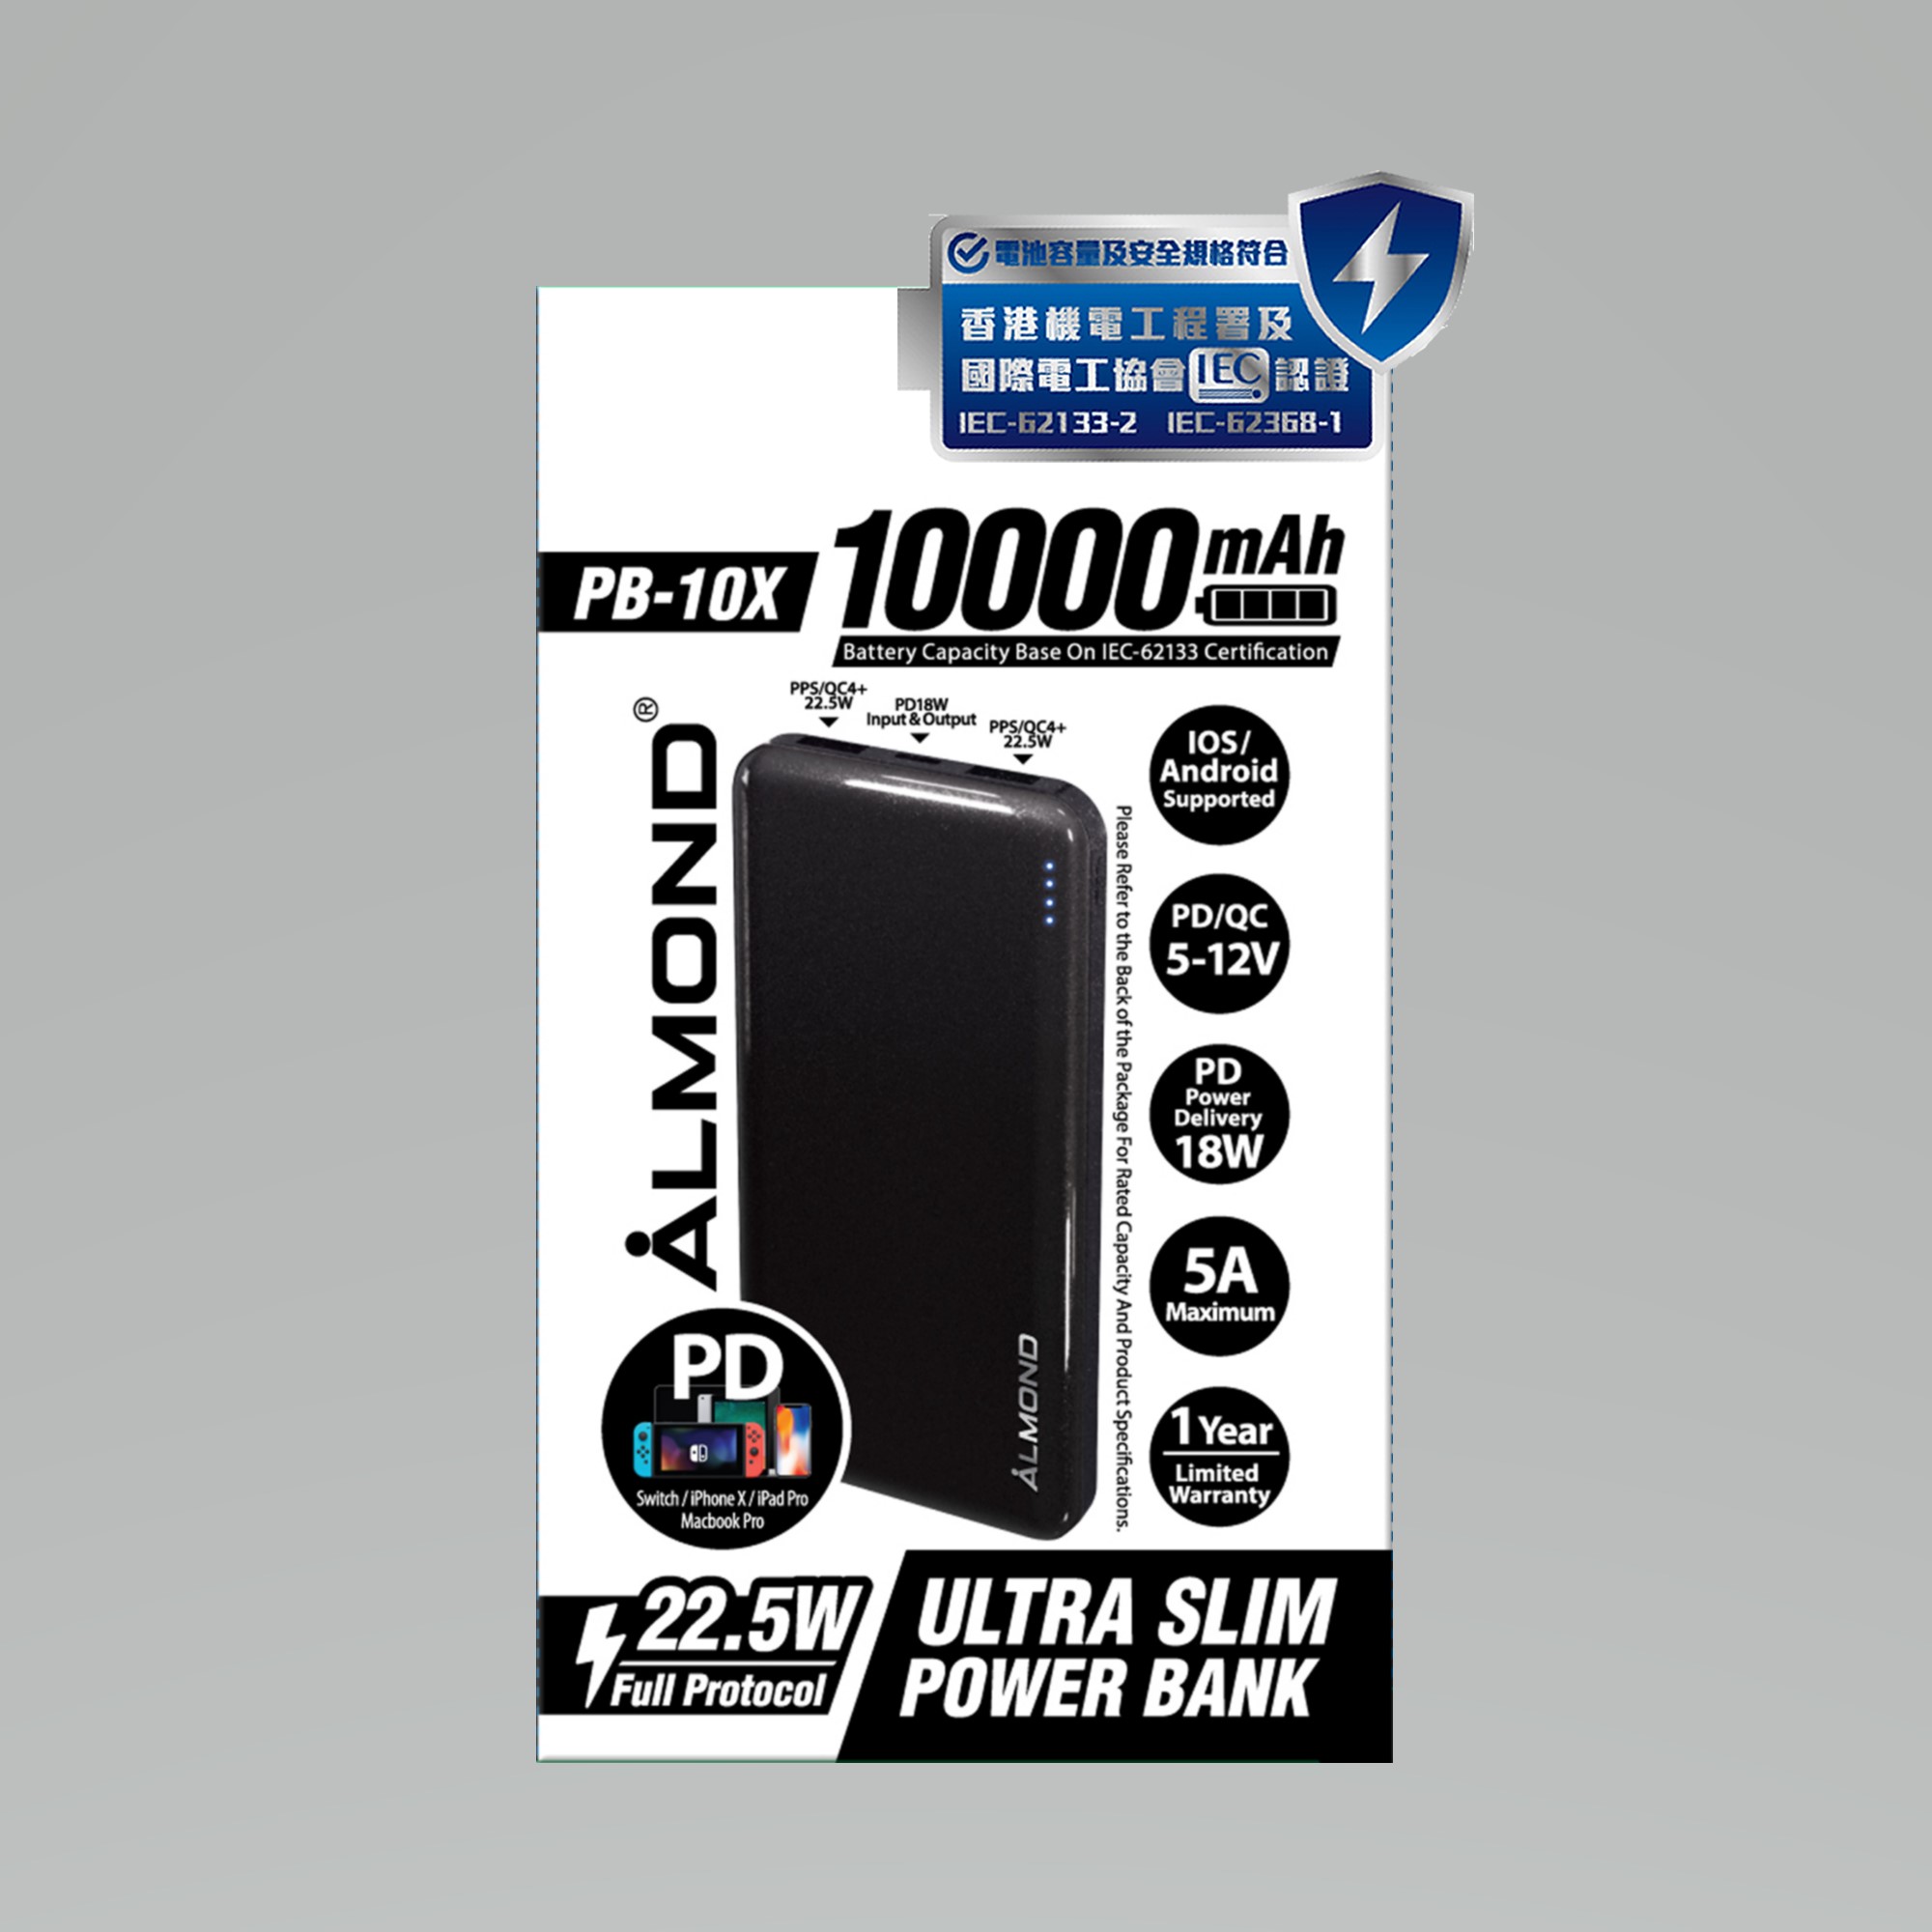 ALMOND PB-10X 10000mAh 移動電源 - 黑色, 黑色, large image number 1